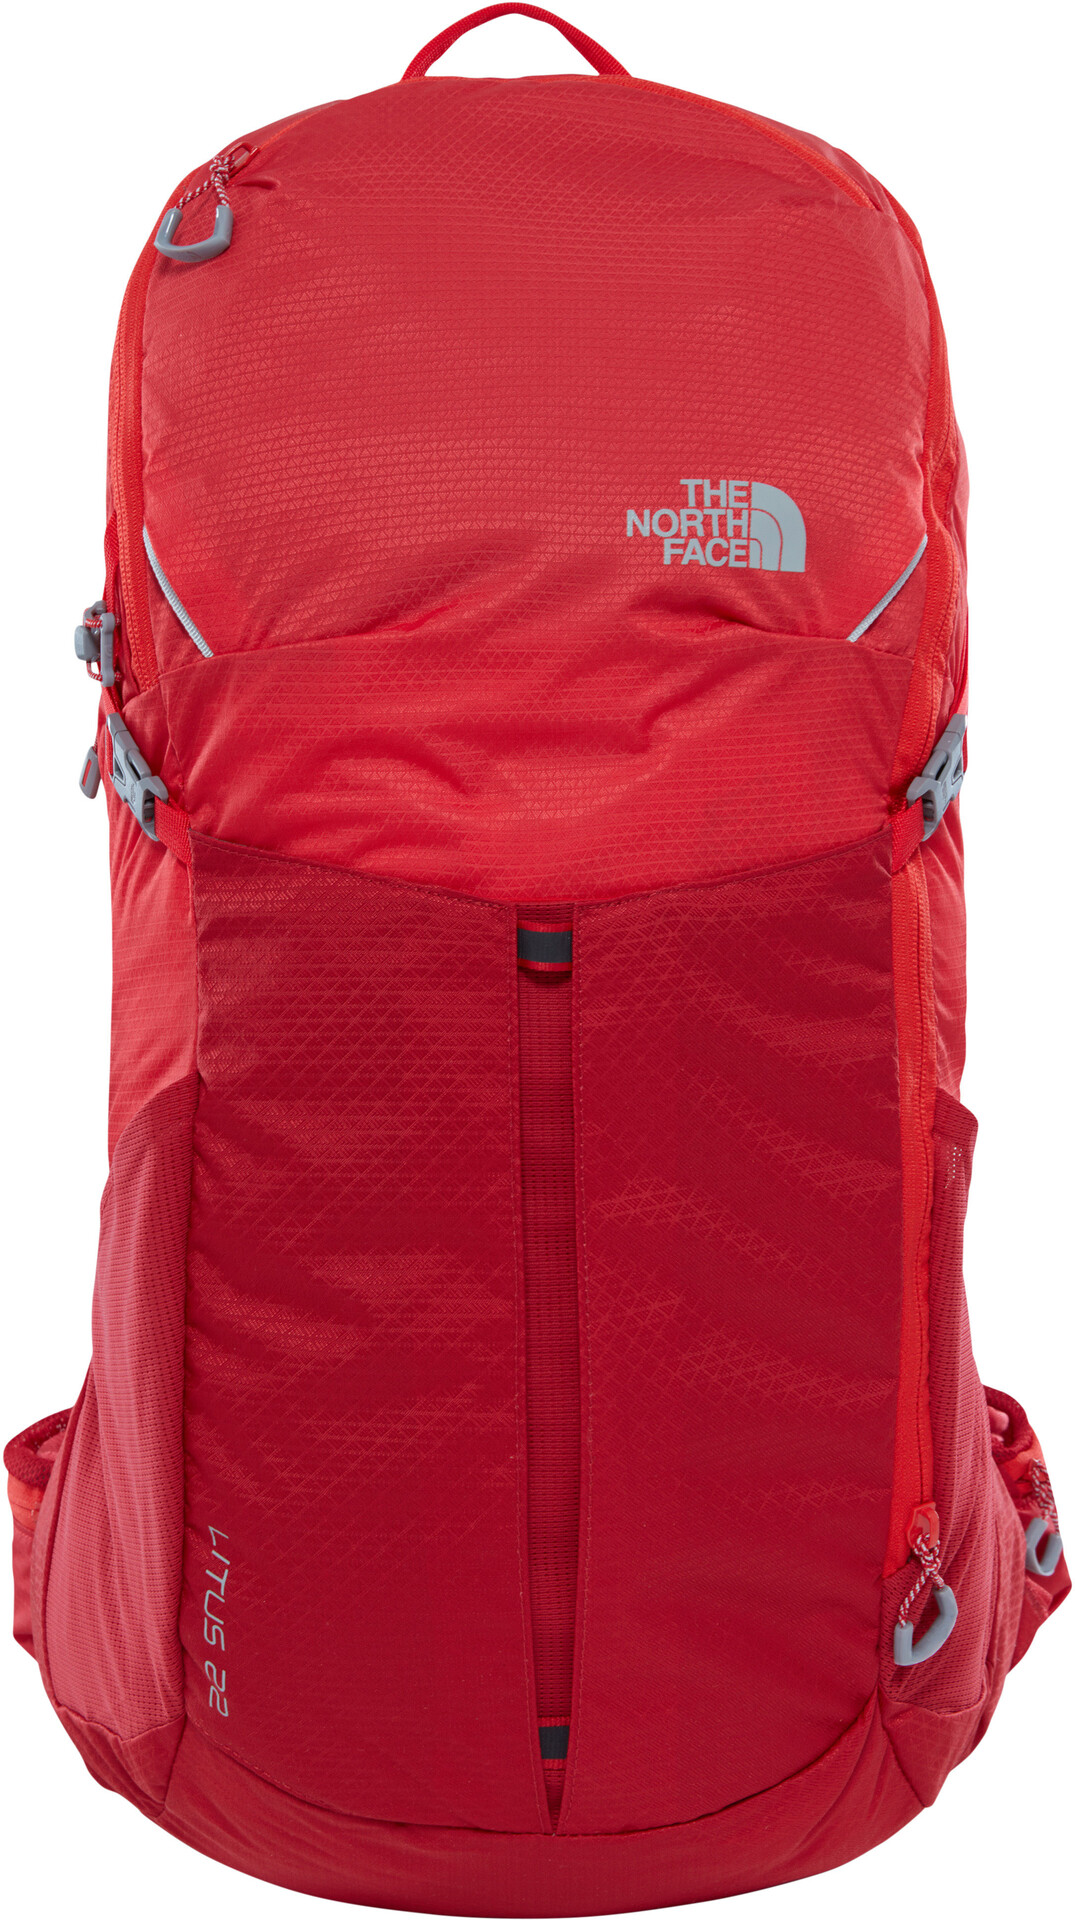 litus 22 rc backpack